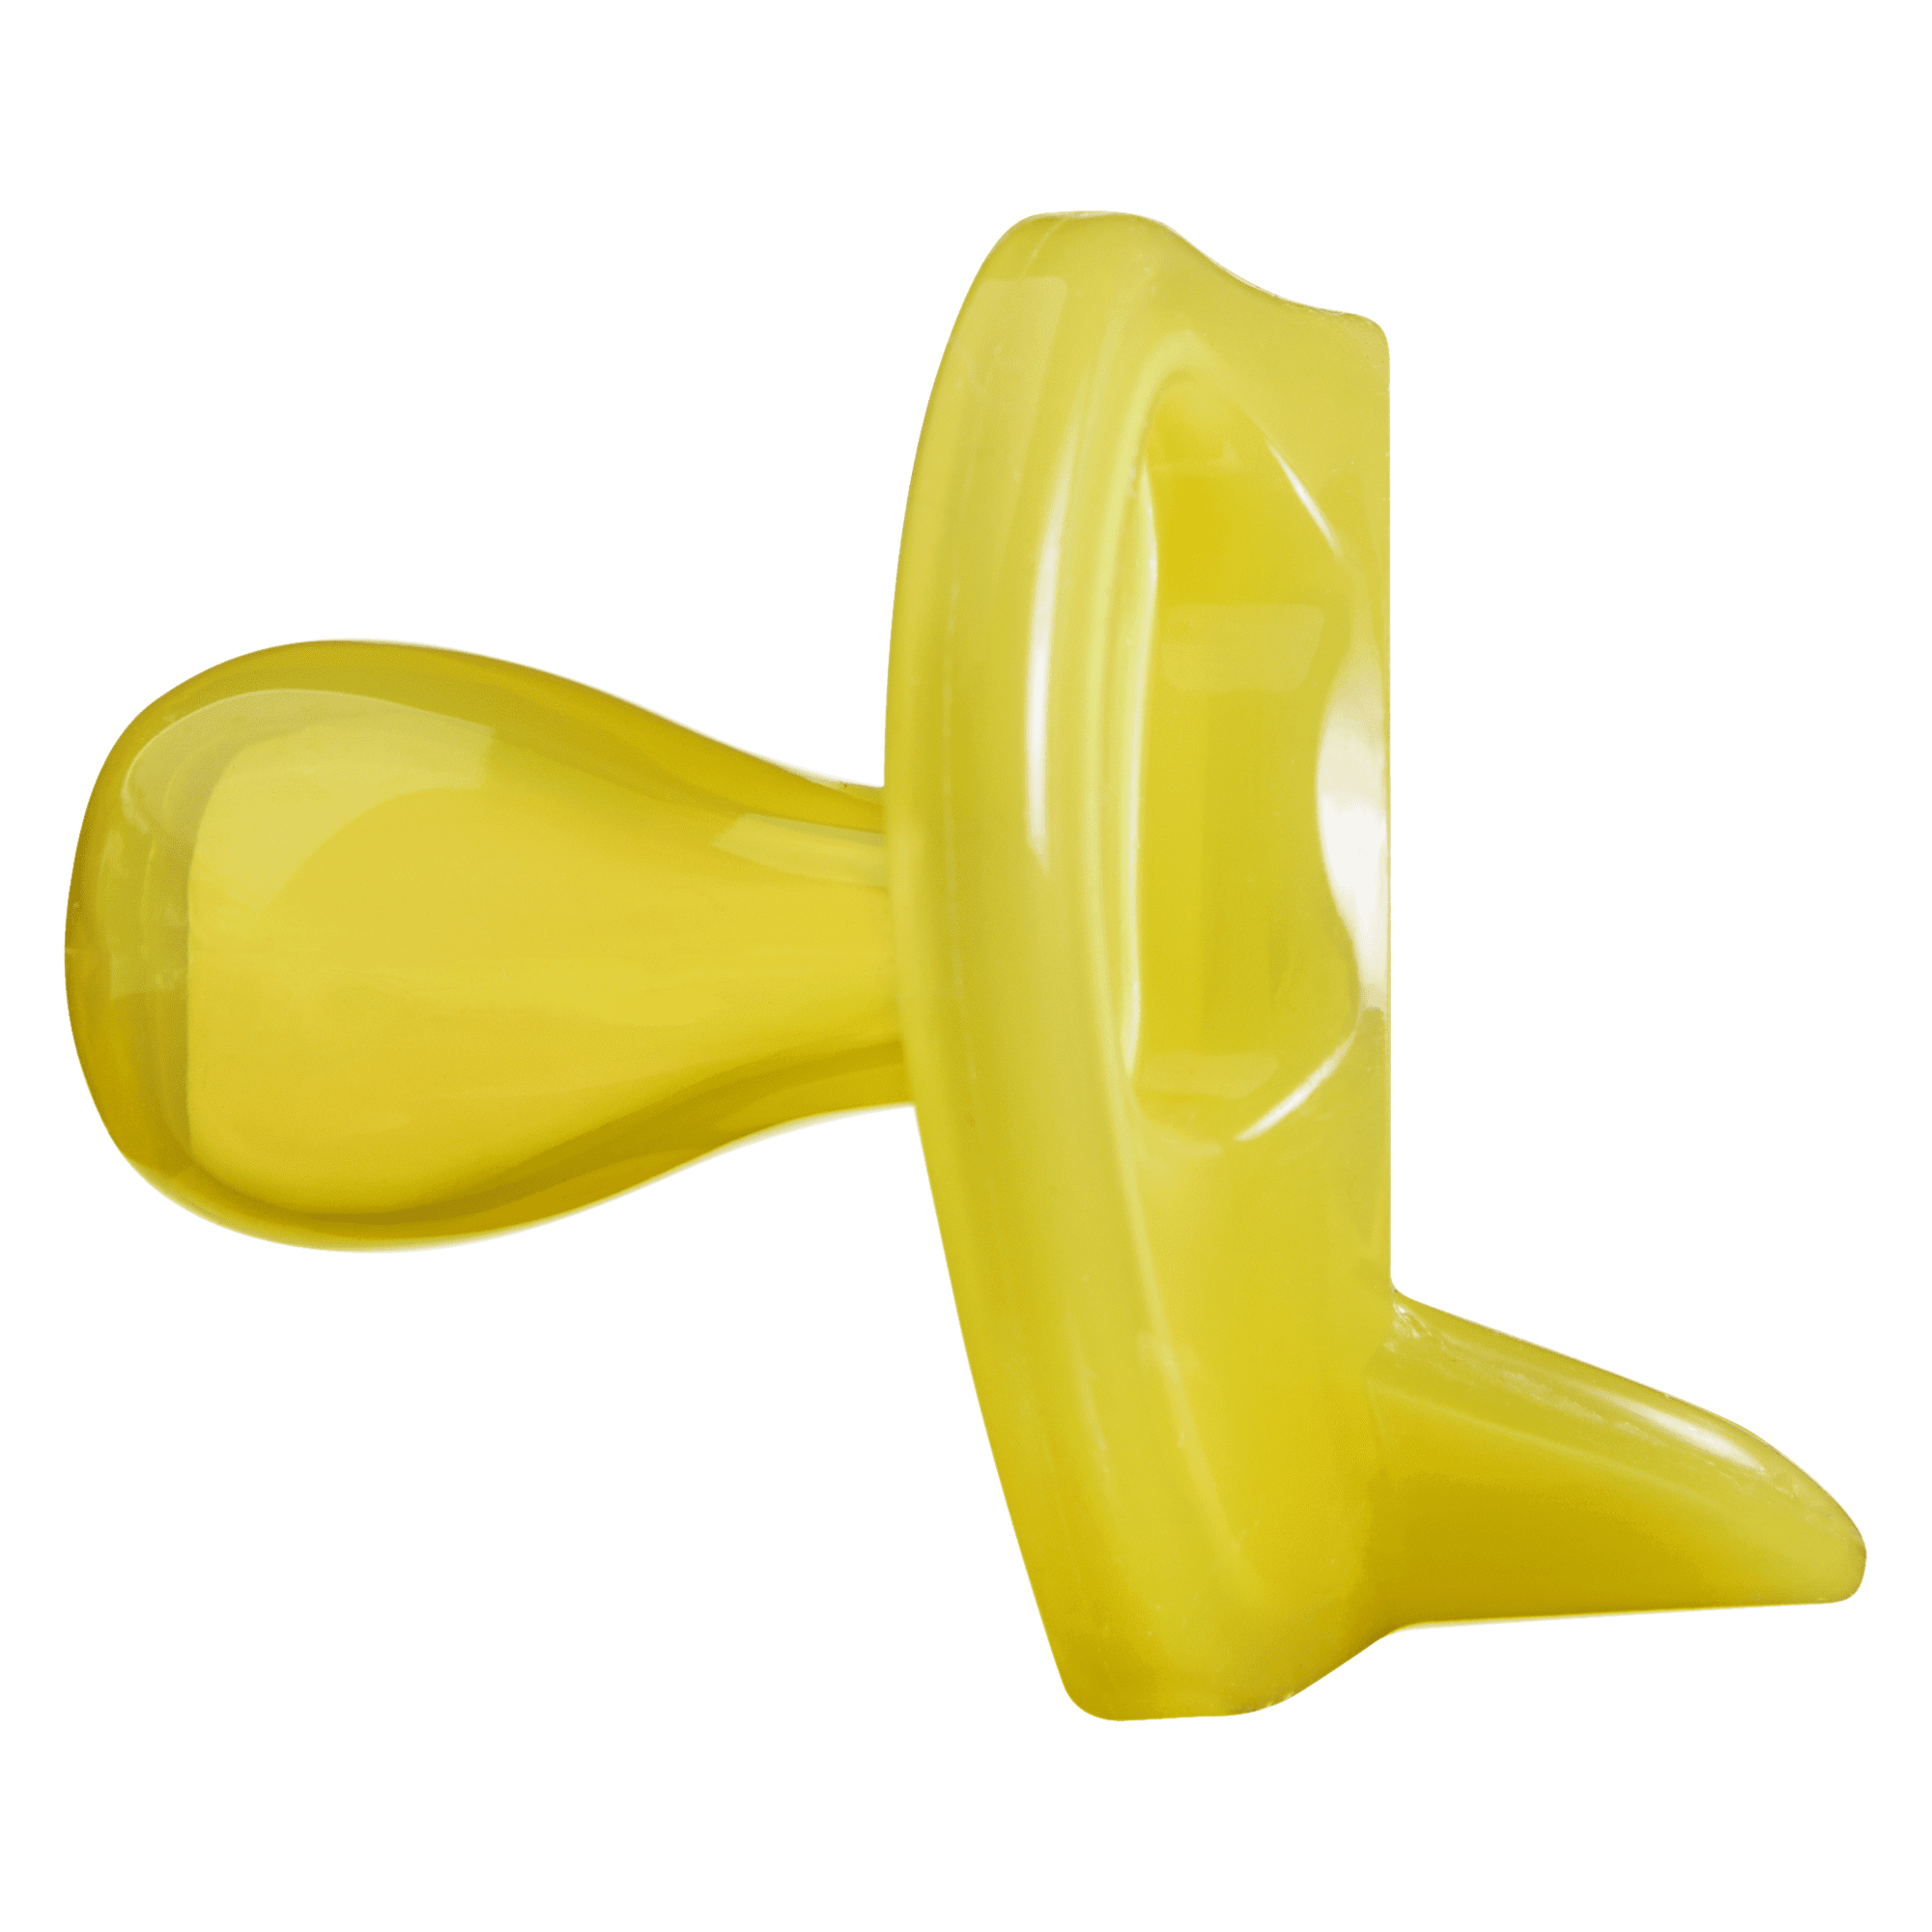 OmieBox - Yellow Sunshine – Pacifier Kids Boutique